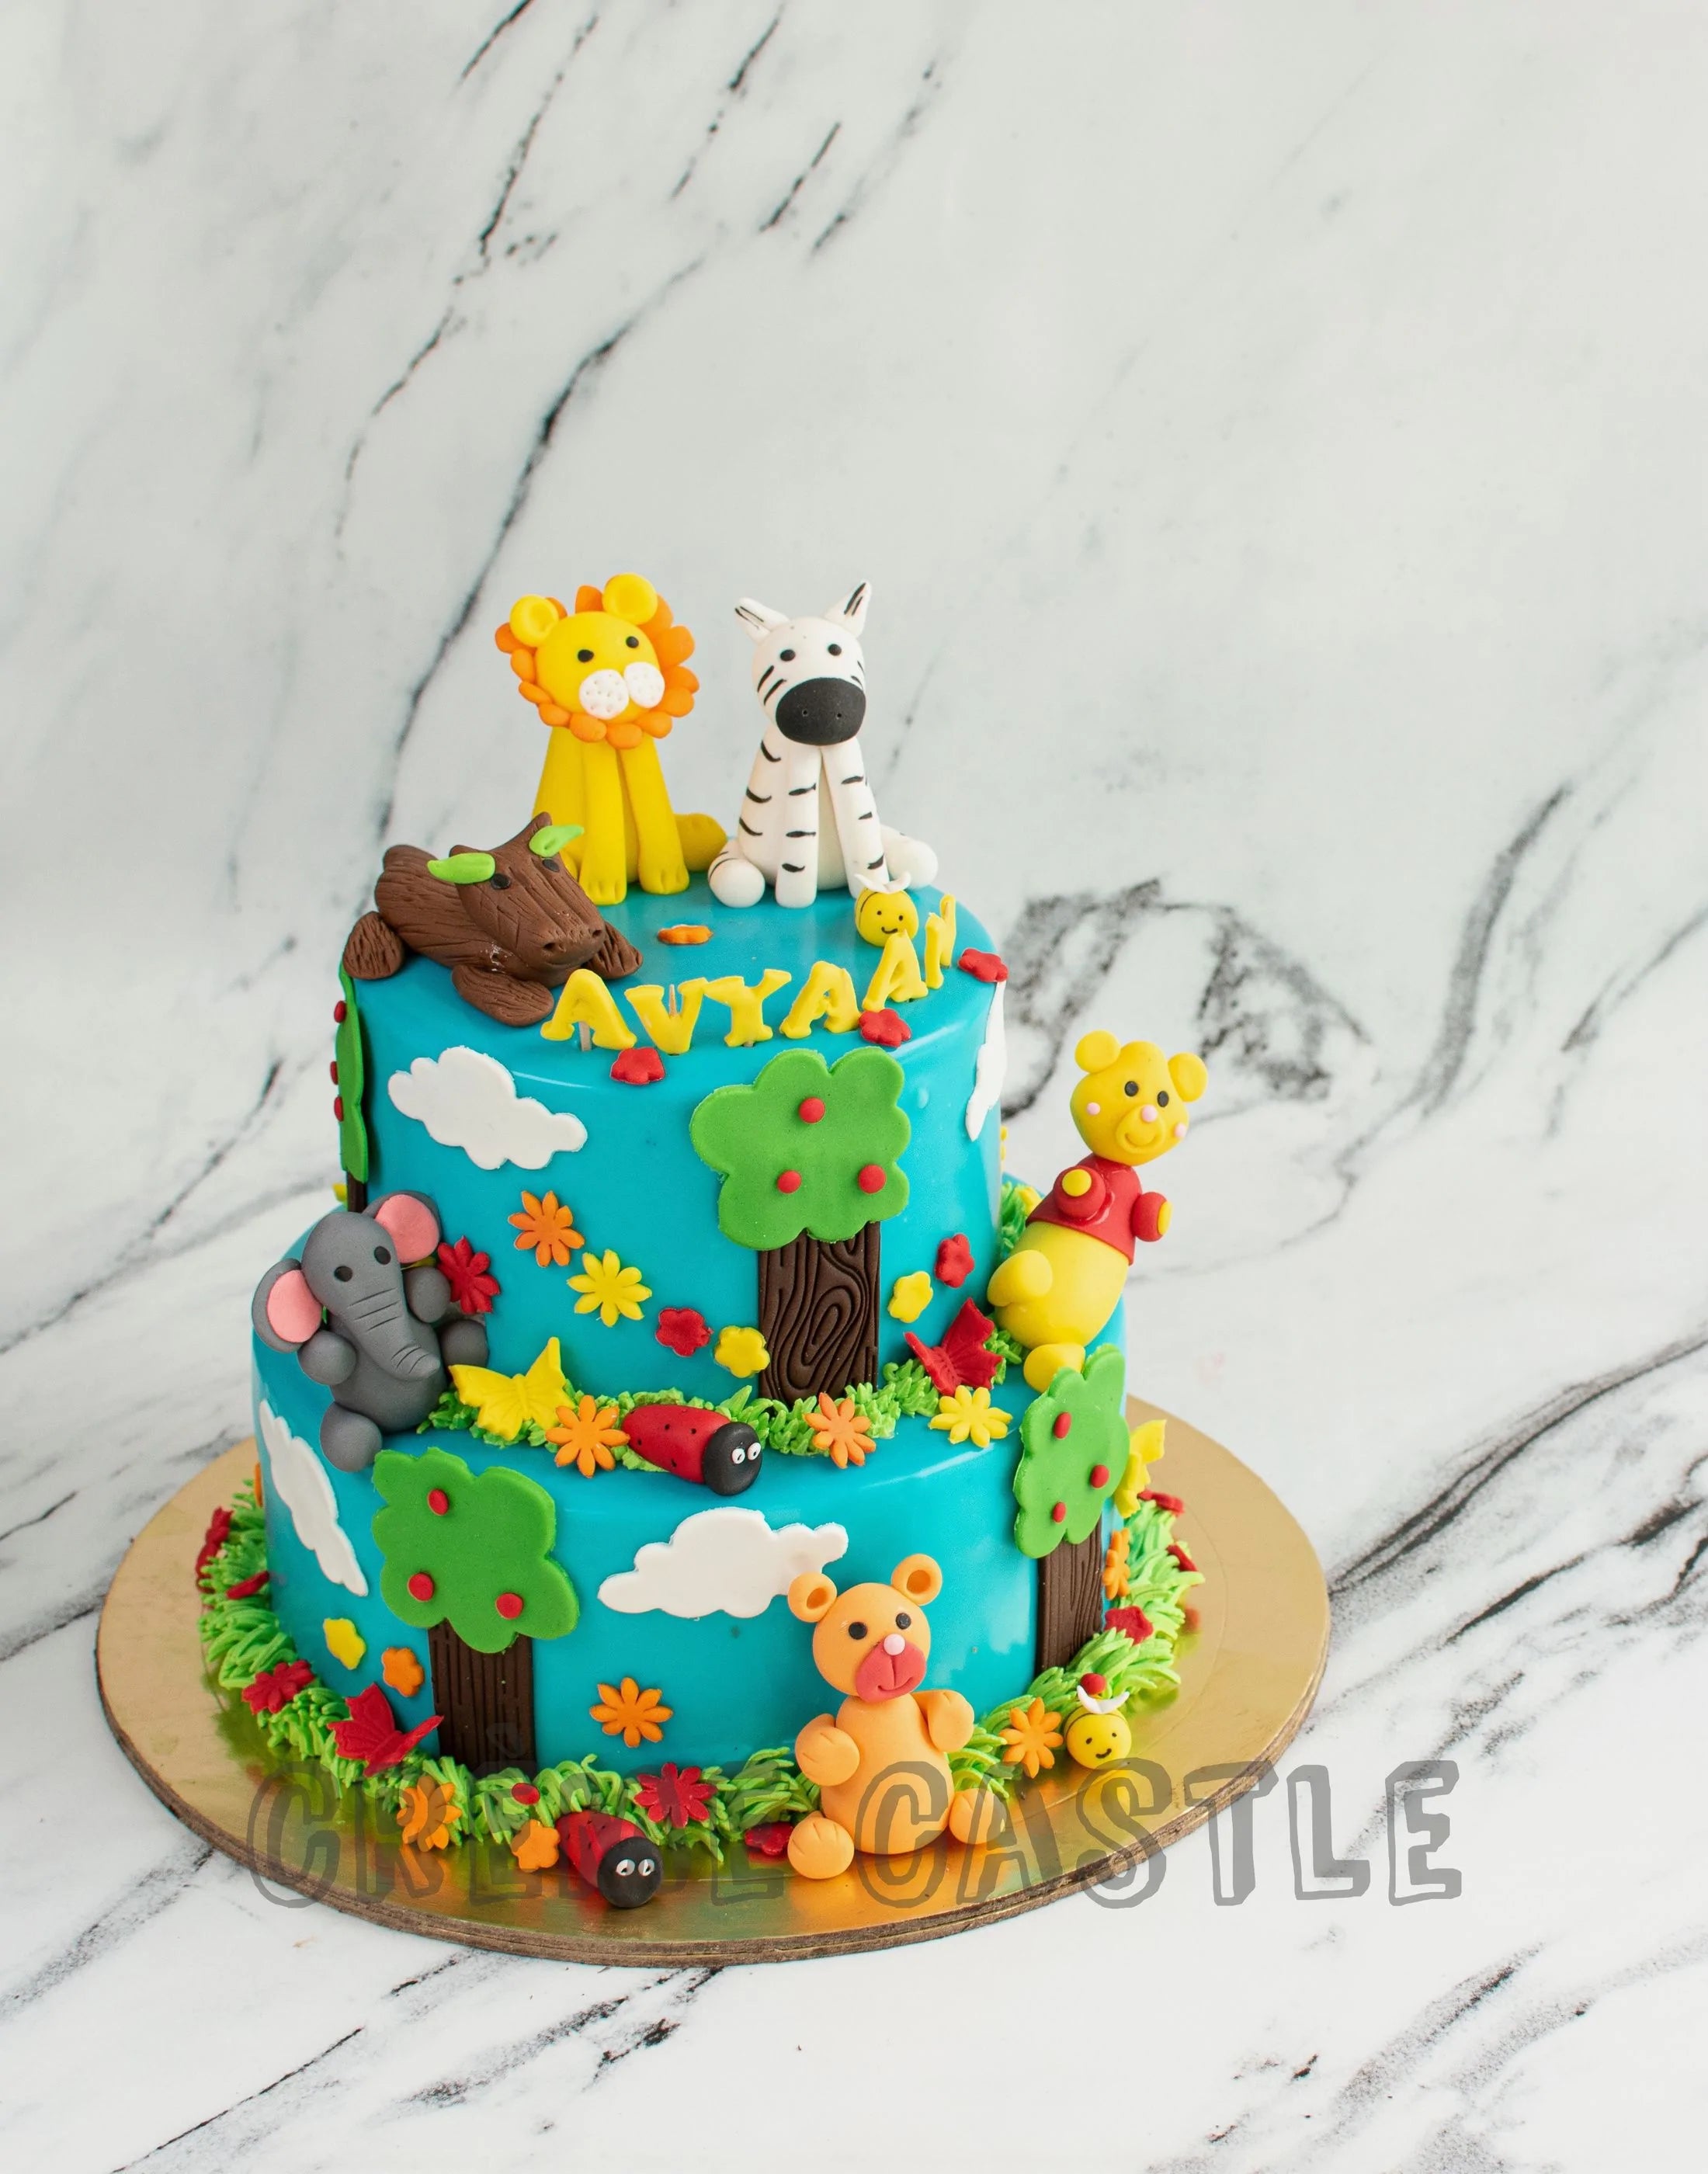 Forest Cake Design Images (Forest Birthday Cake Ideas) | Woodland theme cake,  Forest theme cakes, Animal cakes